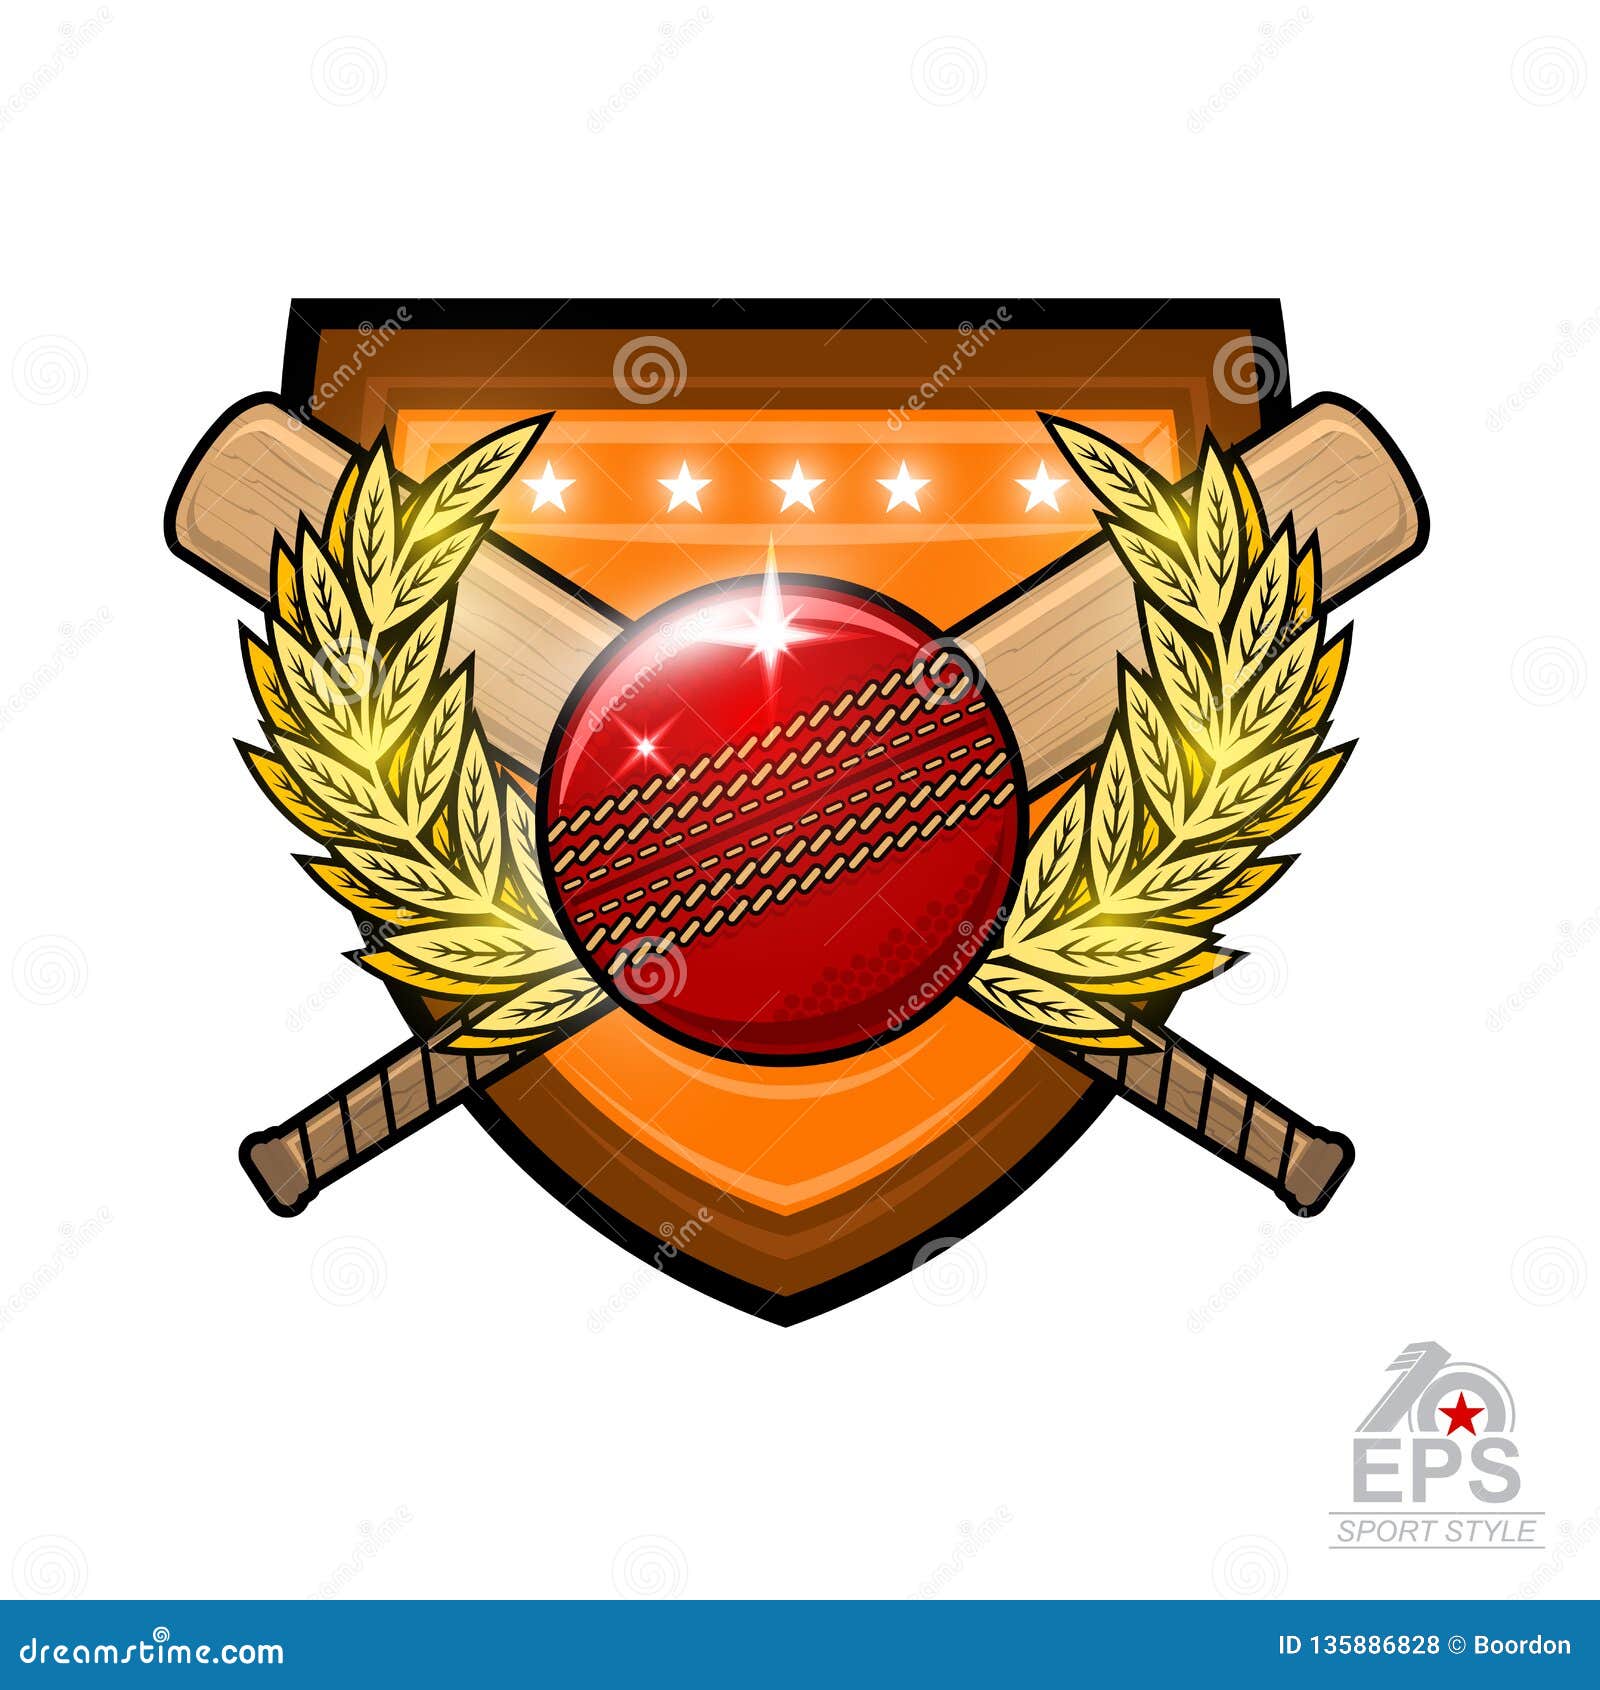 Cricket Images - Free Download on Freepik